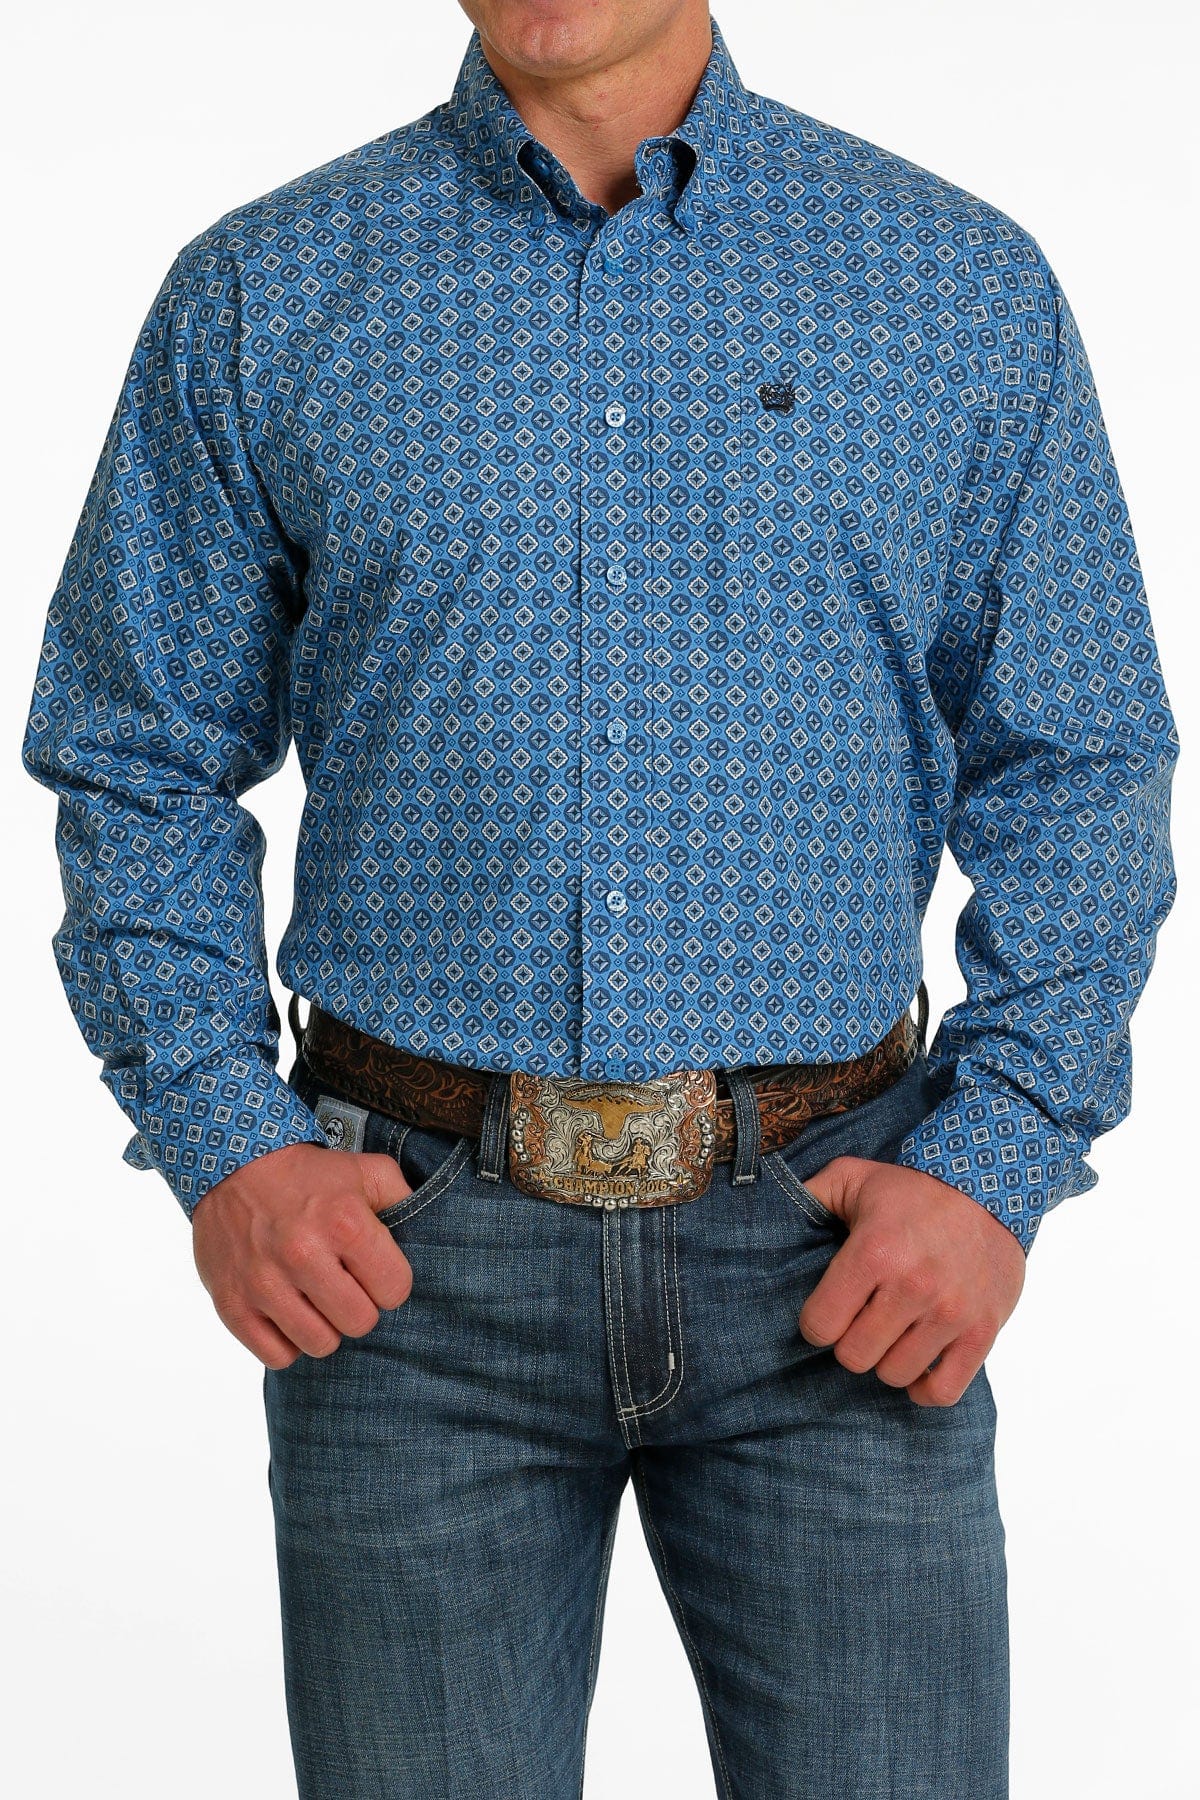 Cinch Men's Medallion Blue/Cream Long Sleeve Button Down Western Shirt -  Russell's Western Wear, Inc.